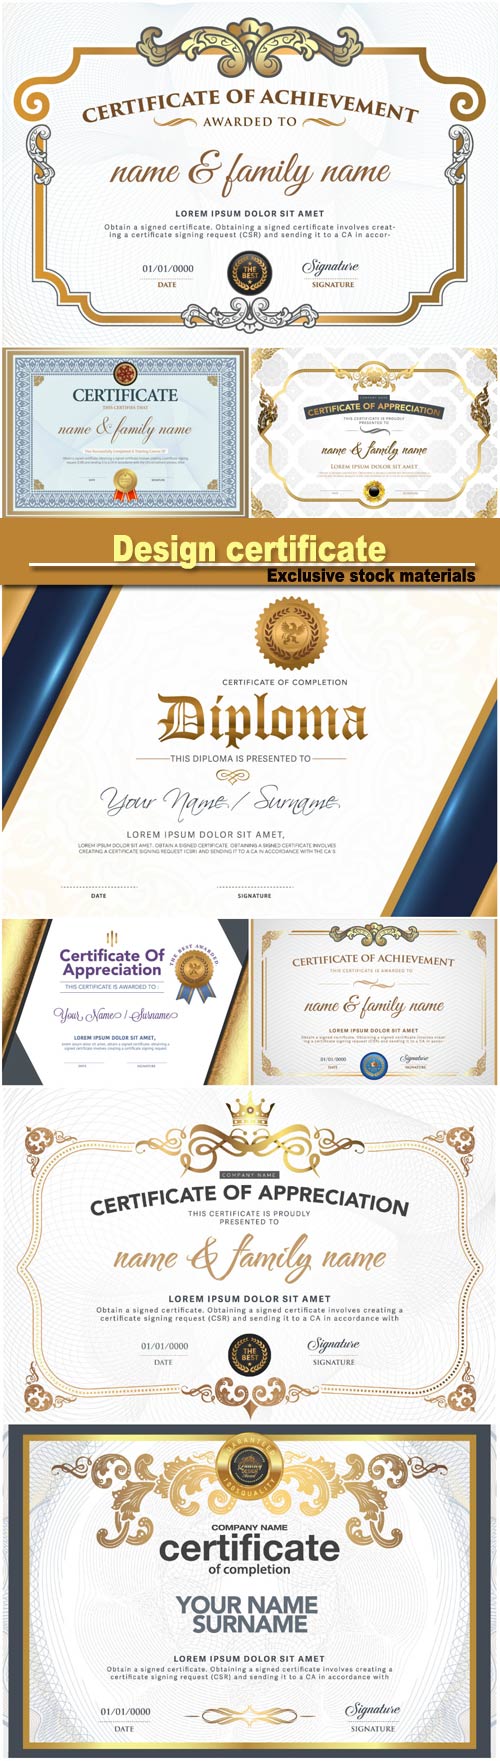 Design certificate, vector illustration